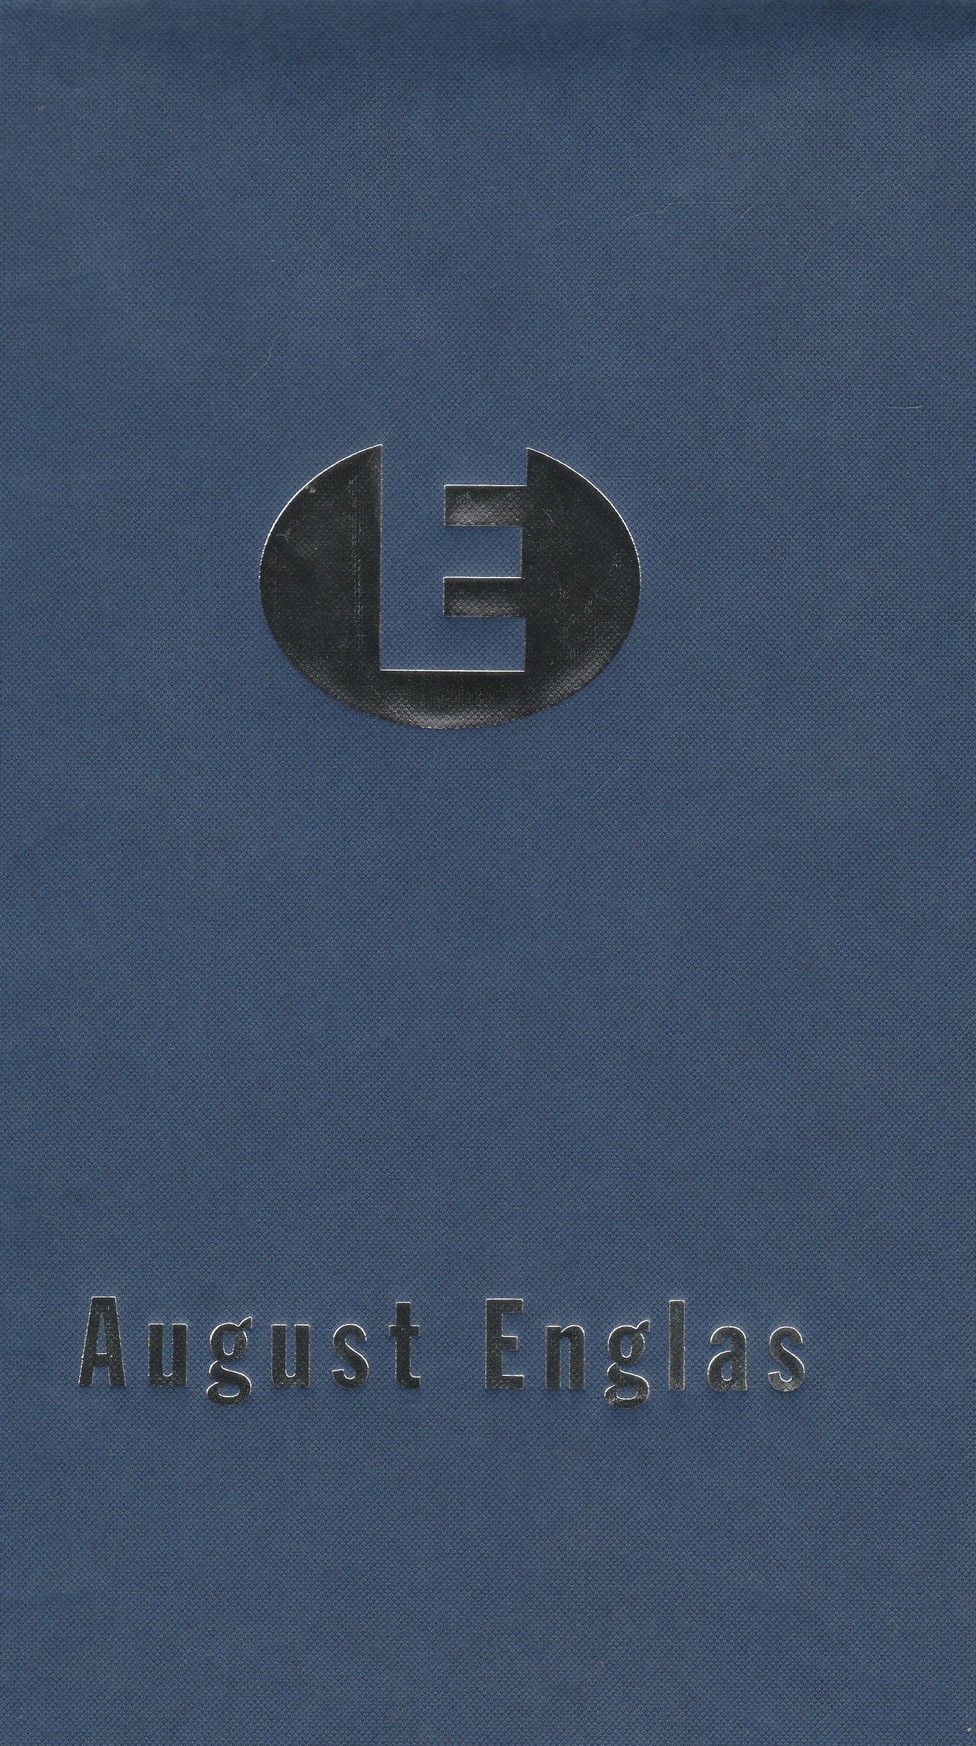 August Englas